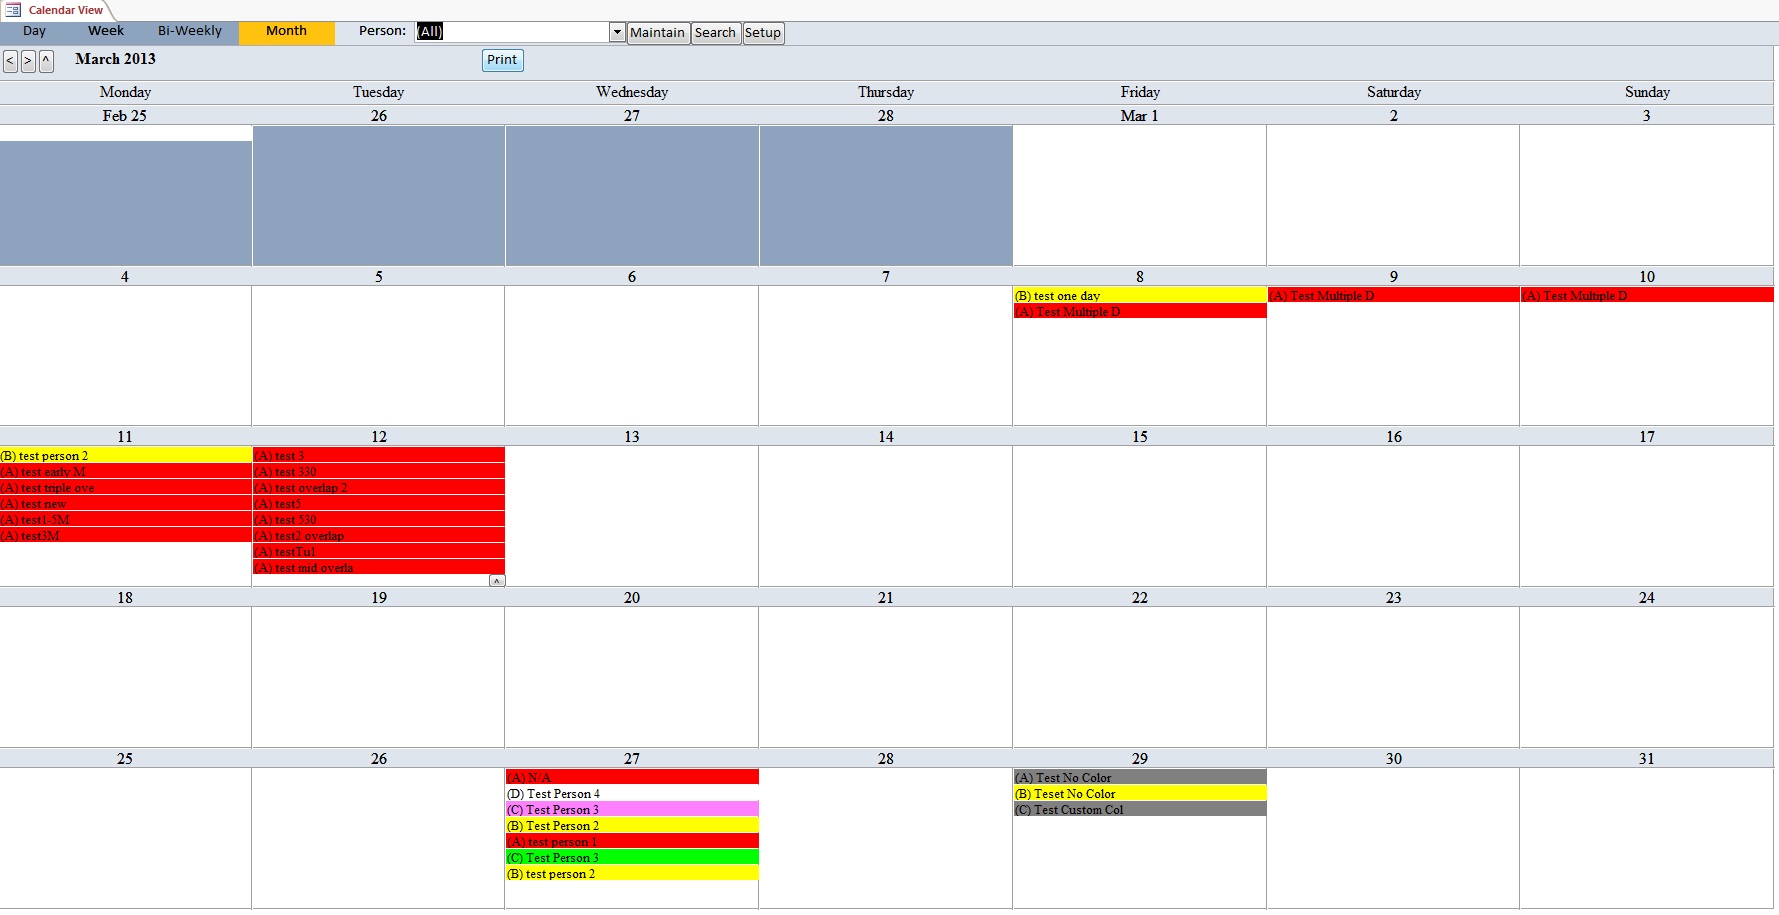 Church Calendar Scheduling Template | Scheduling Database